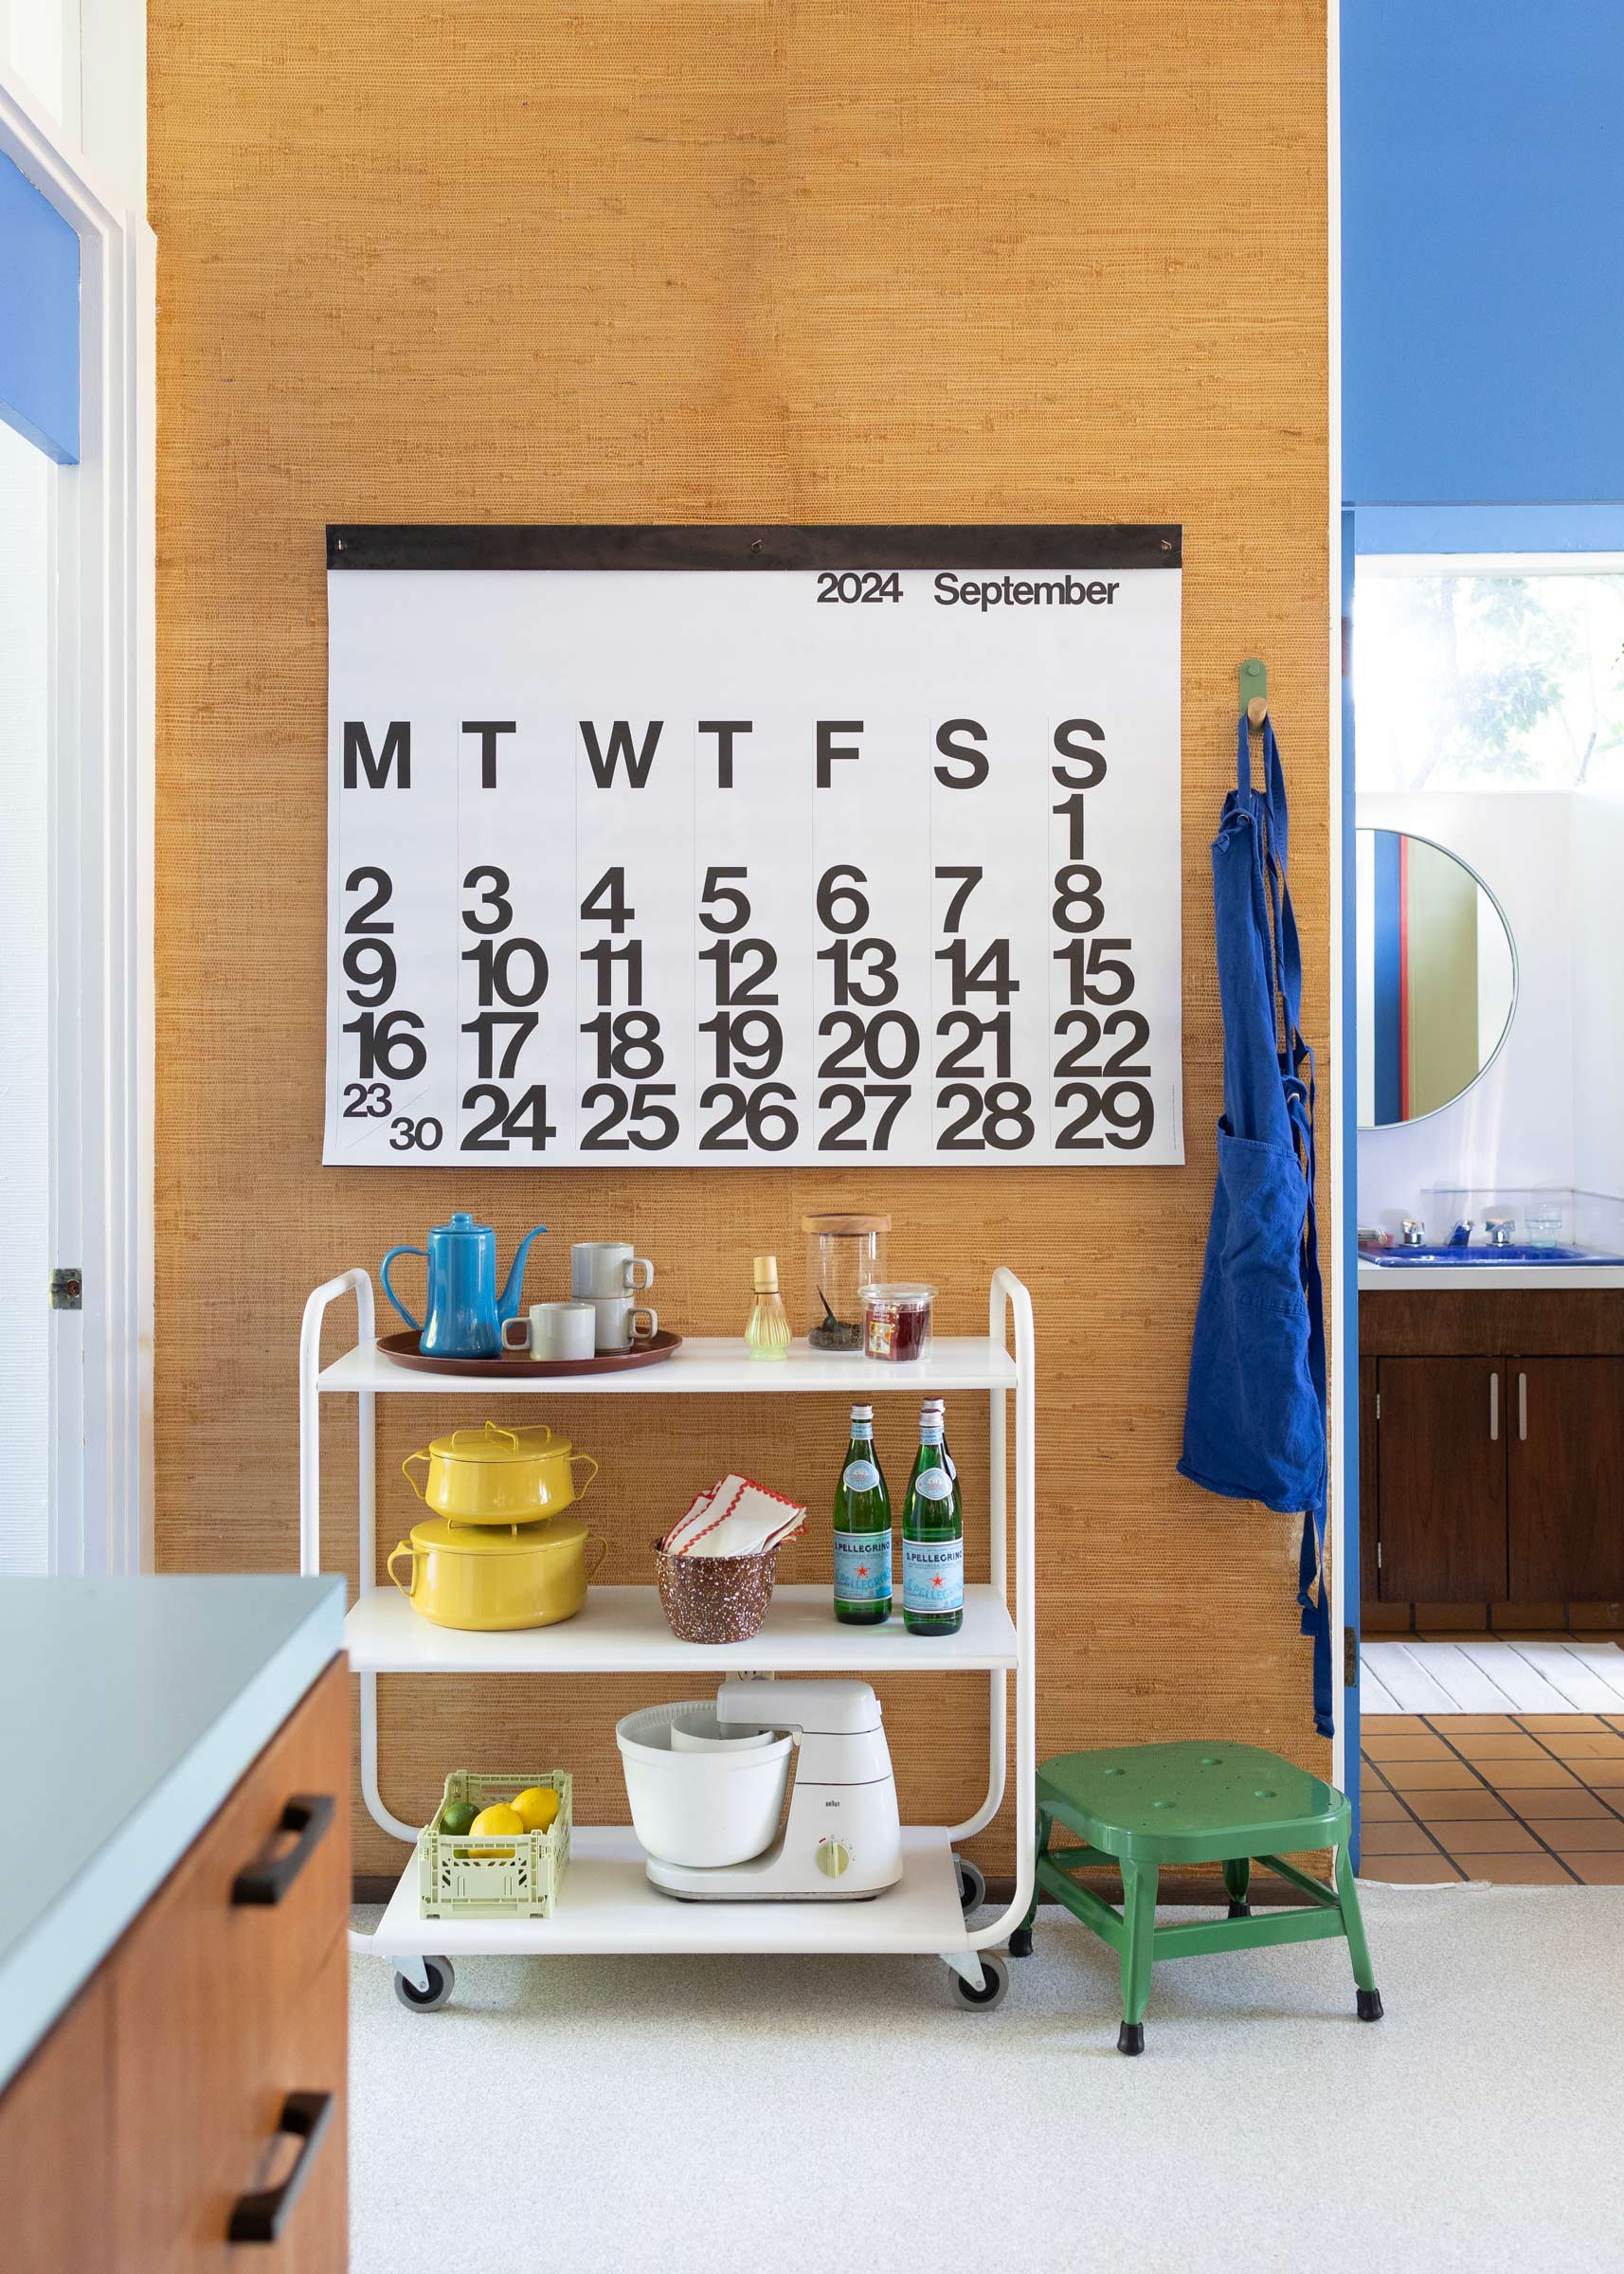 A stendig calendar in the kitchen.